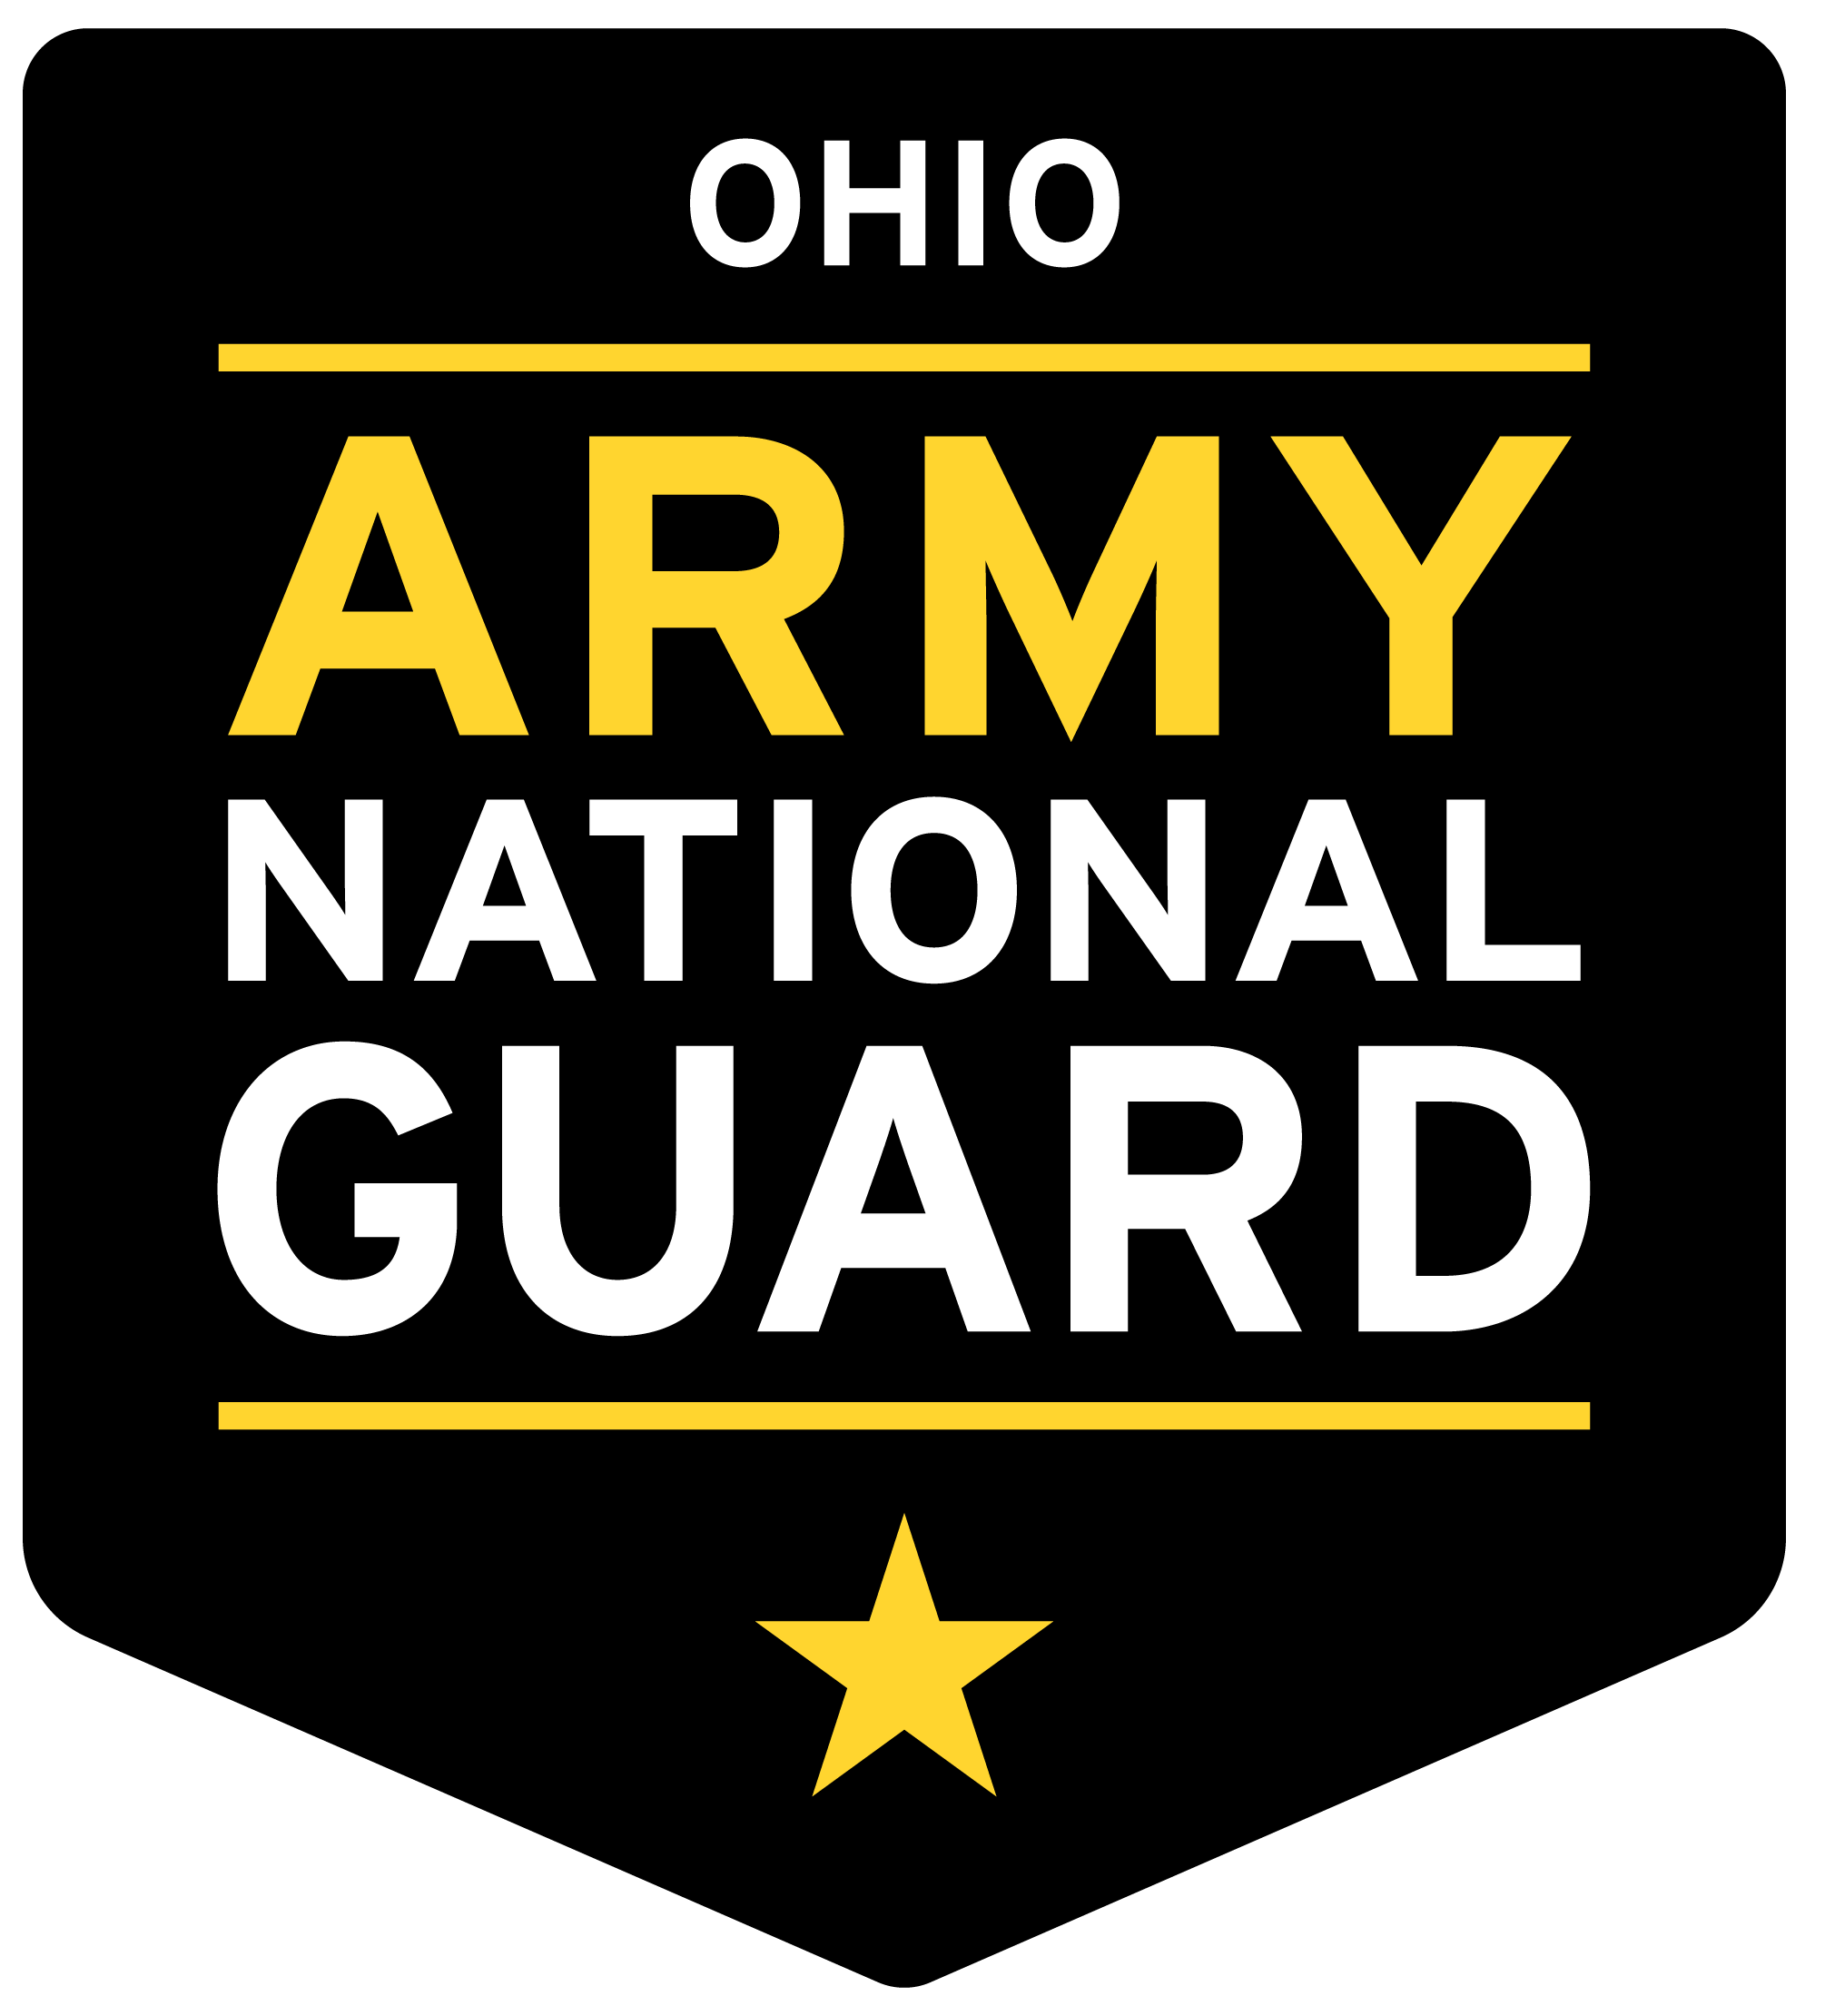 OHIO ARMY NATIONAL GUARD logo